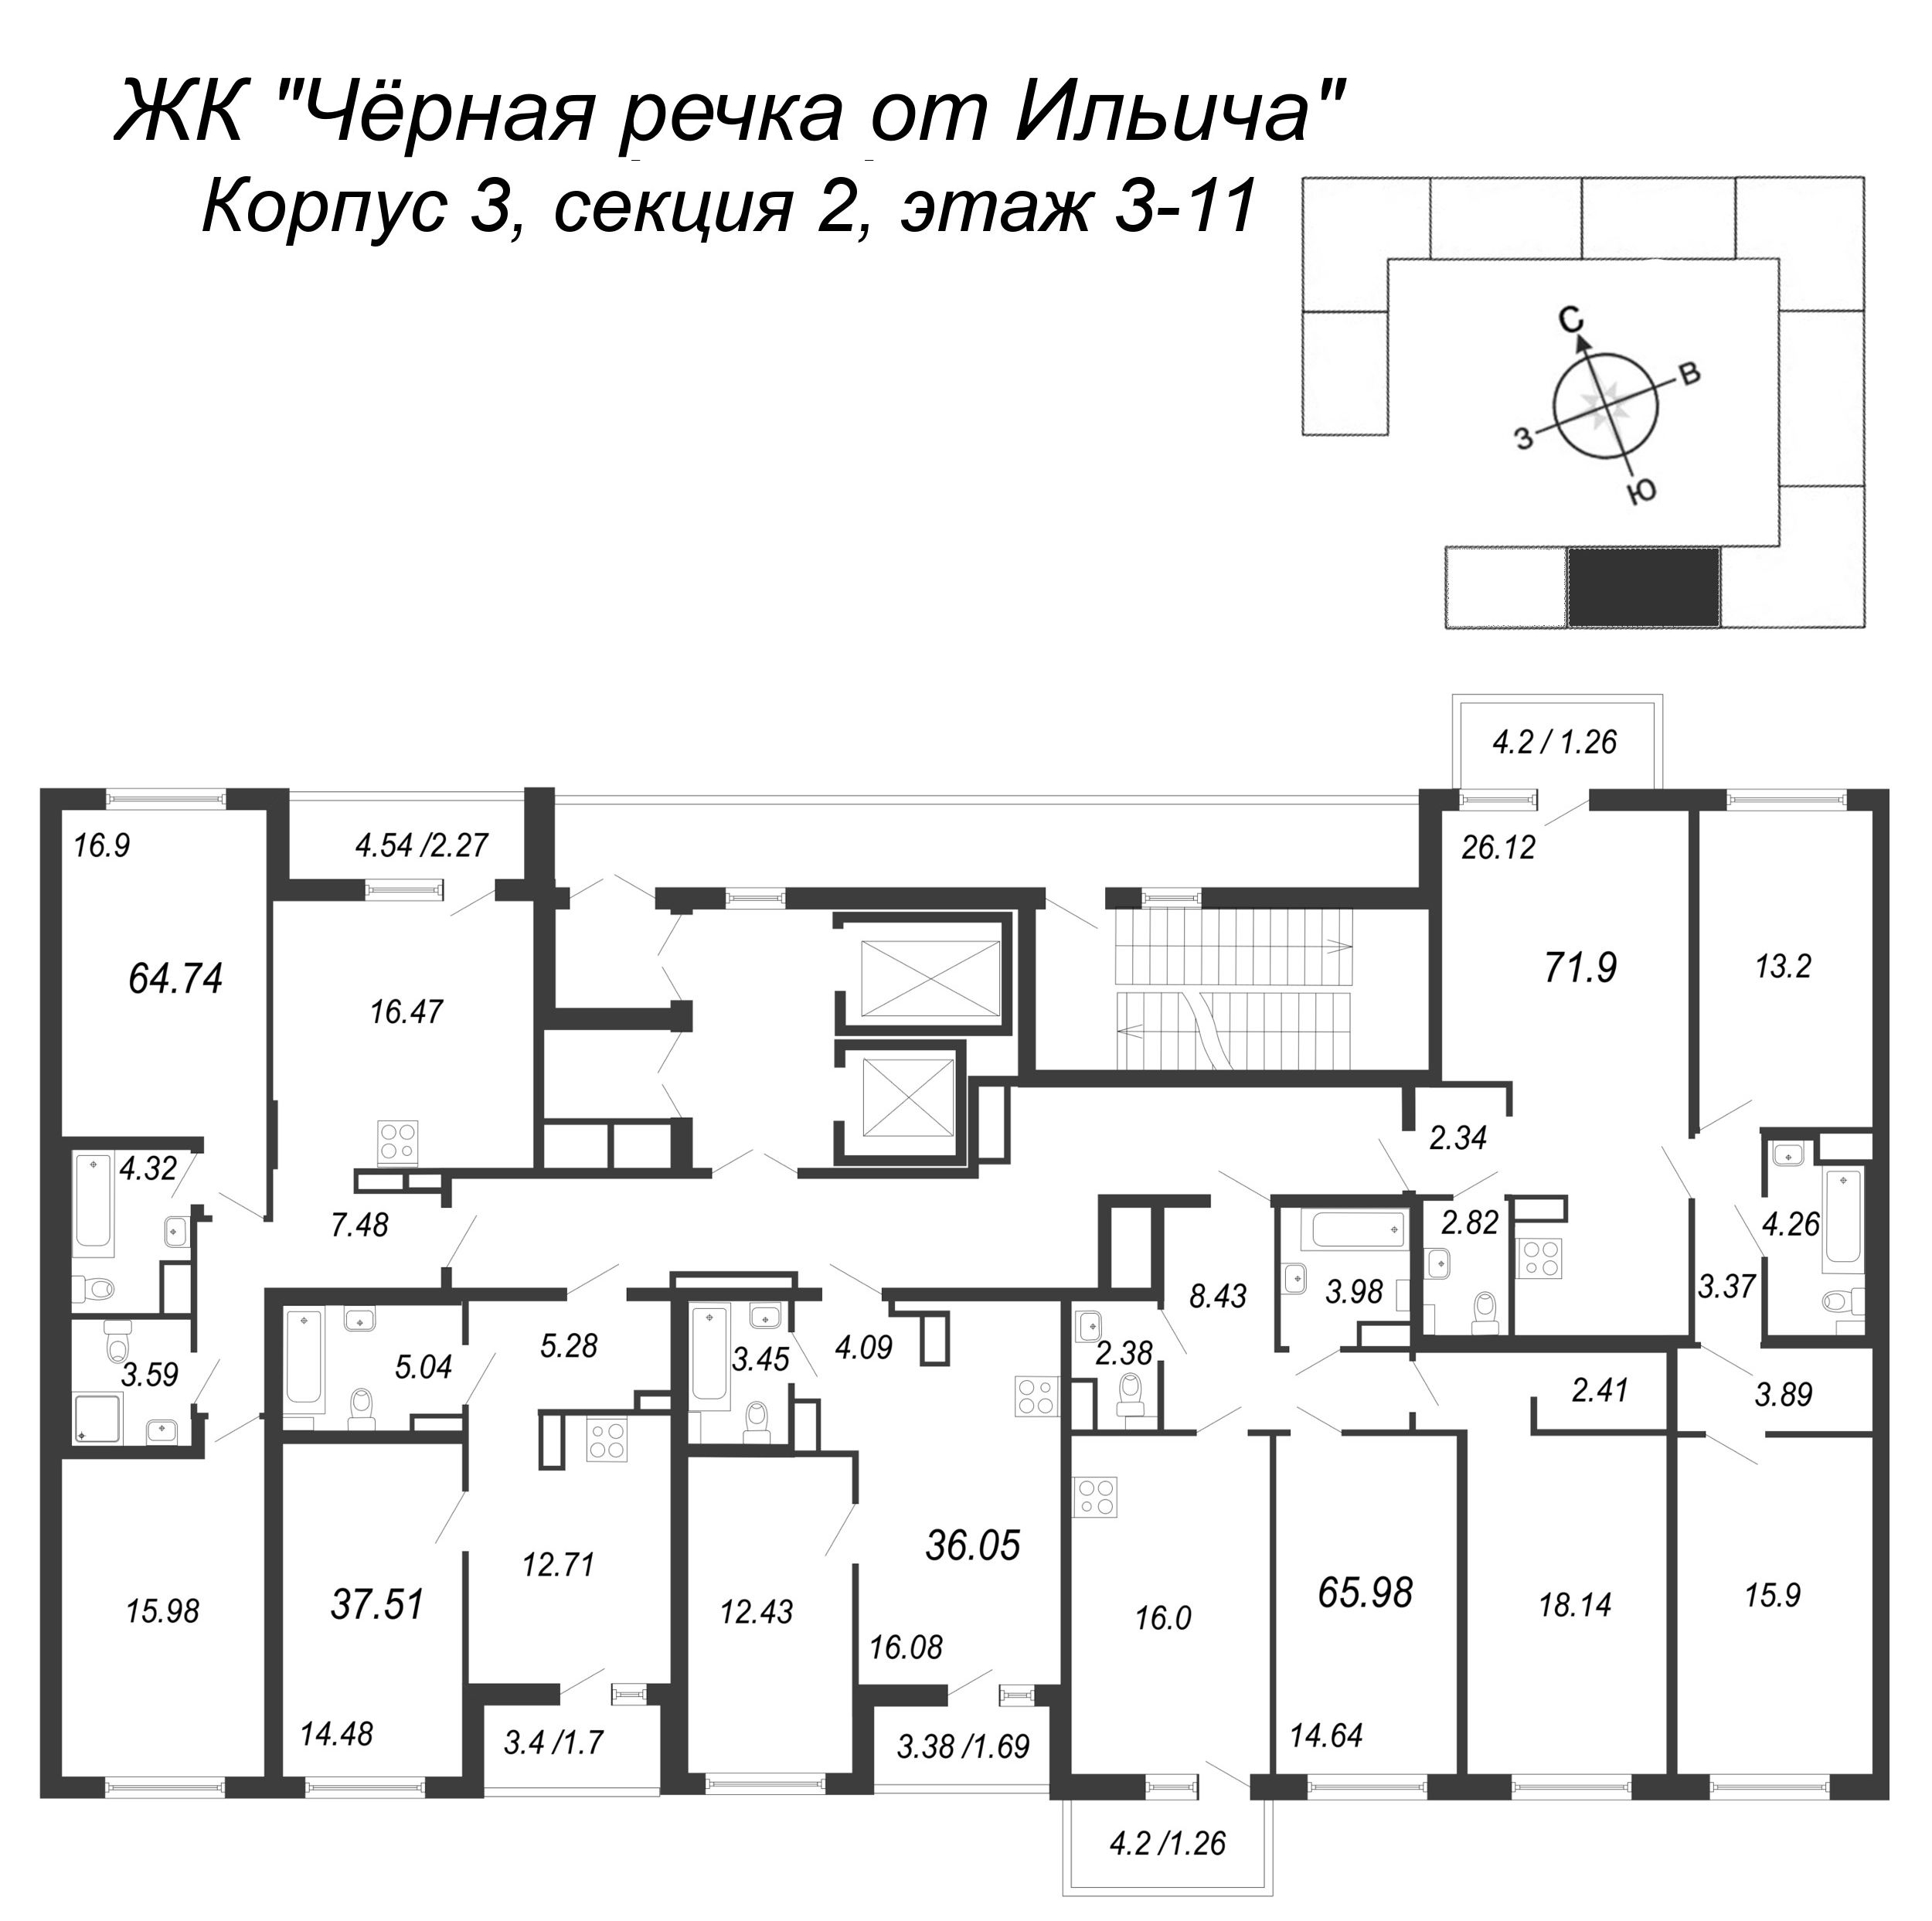 3-комнатная (Евро) квартира, 65.98 м² - планировка этажа